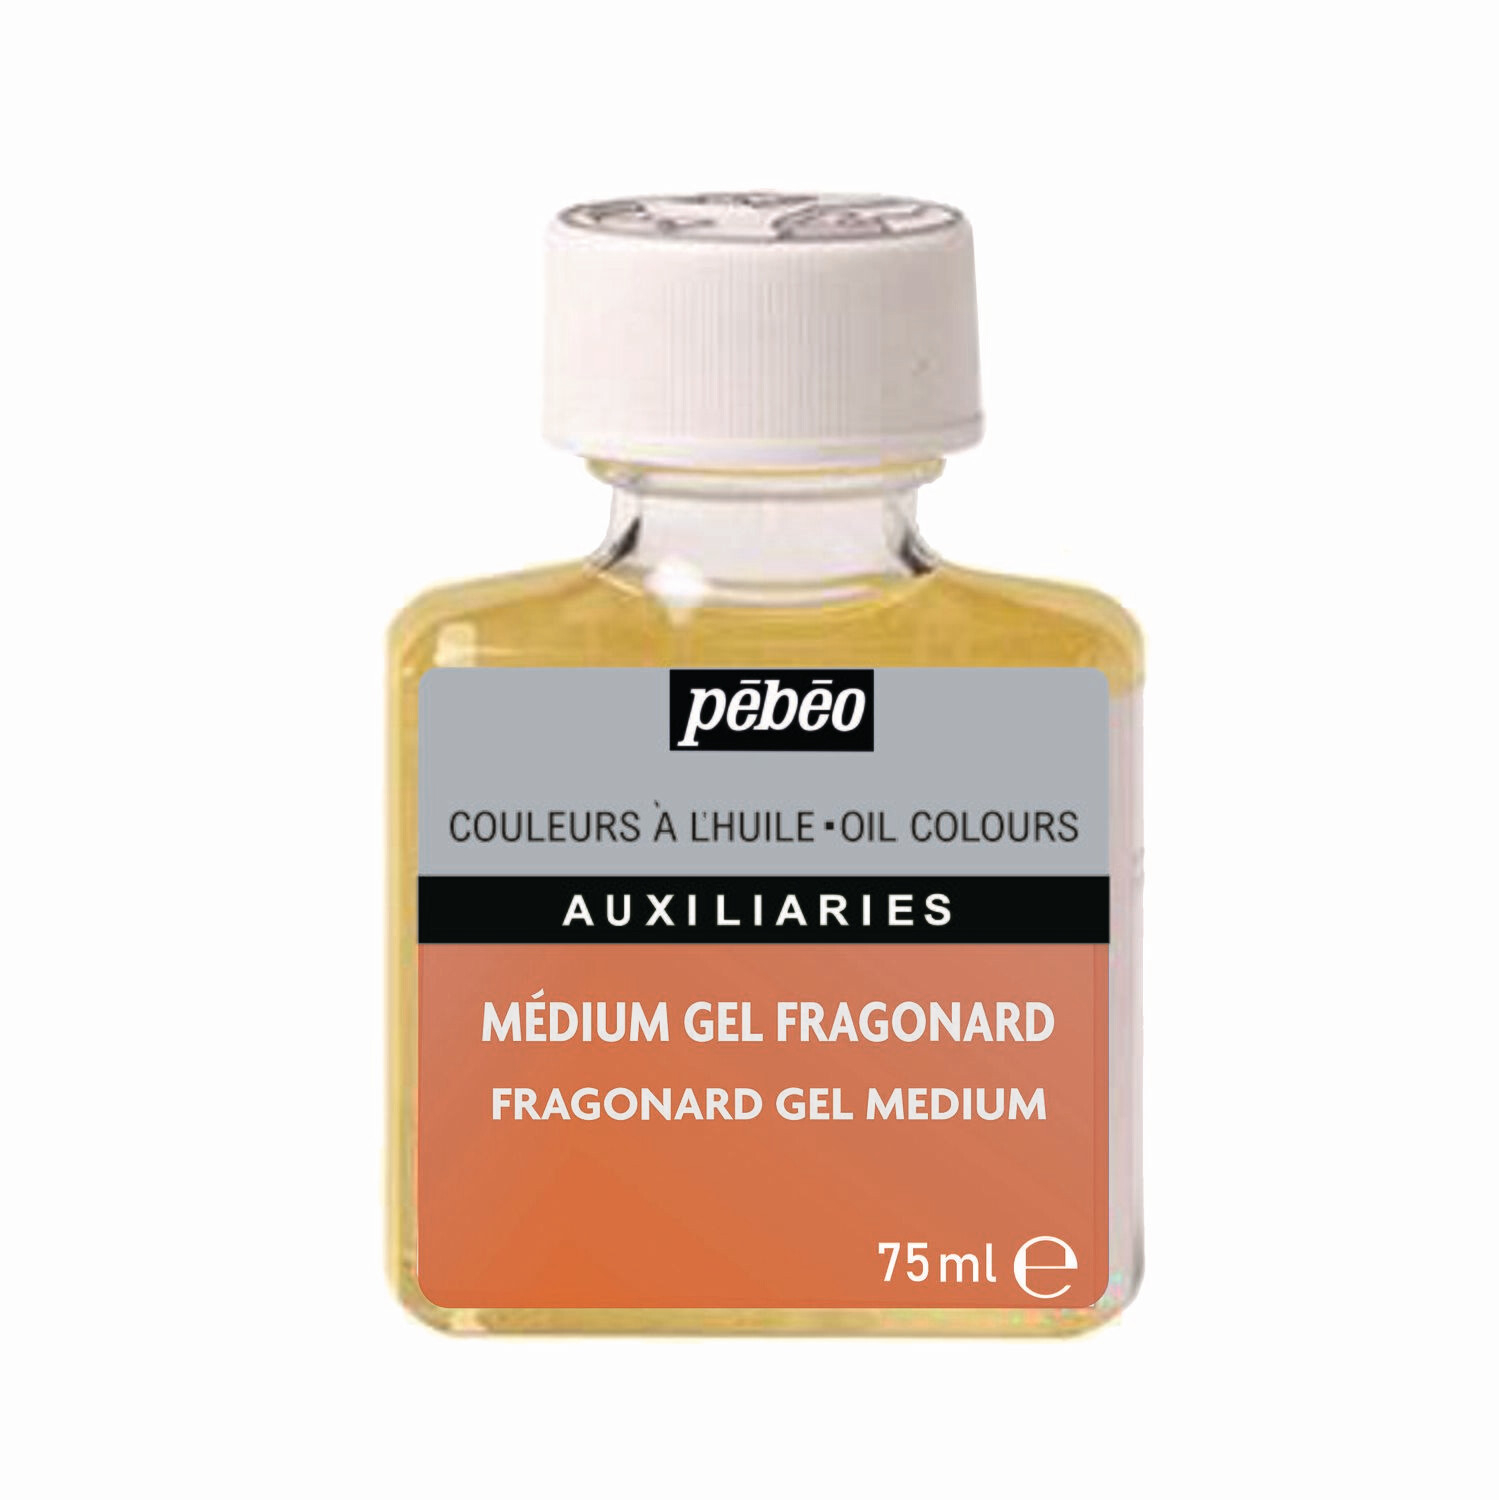 Fragonard Gel Medium. 75 ml